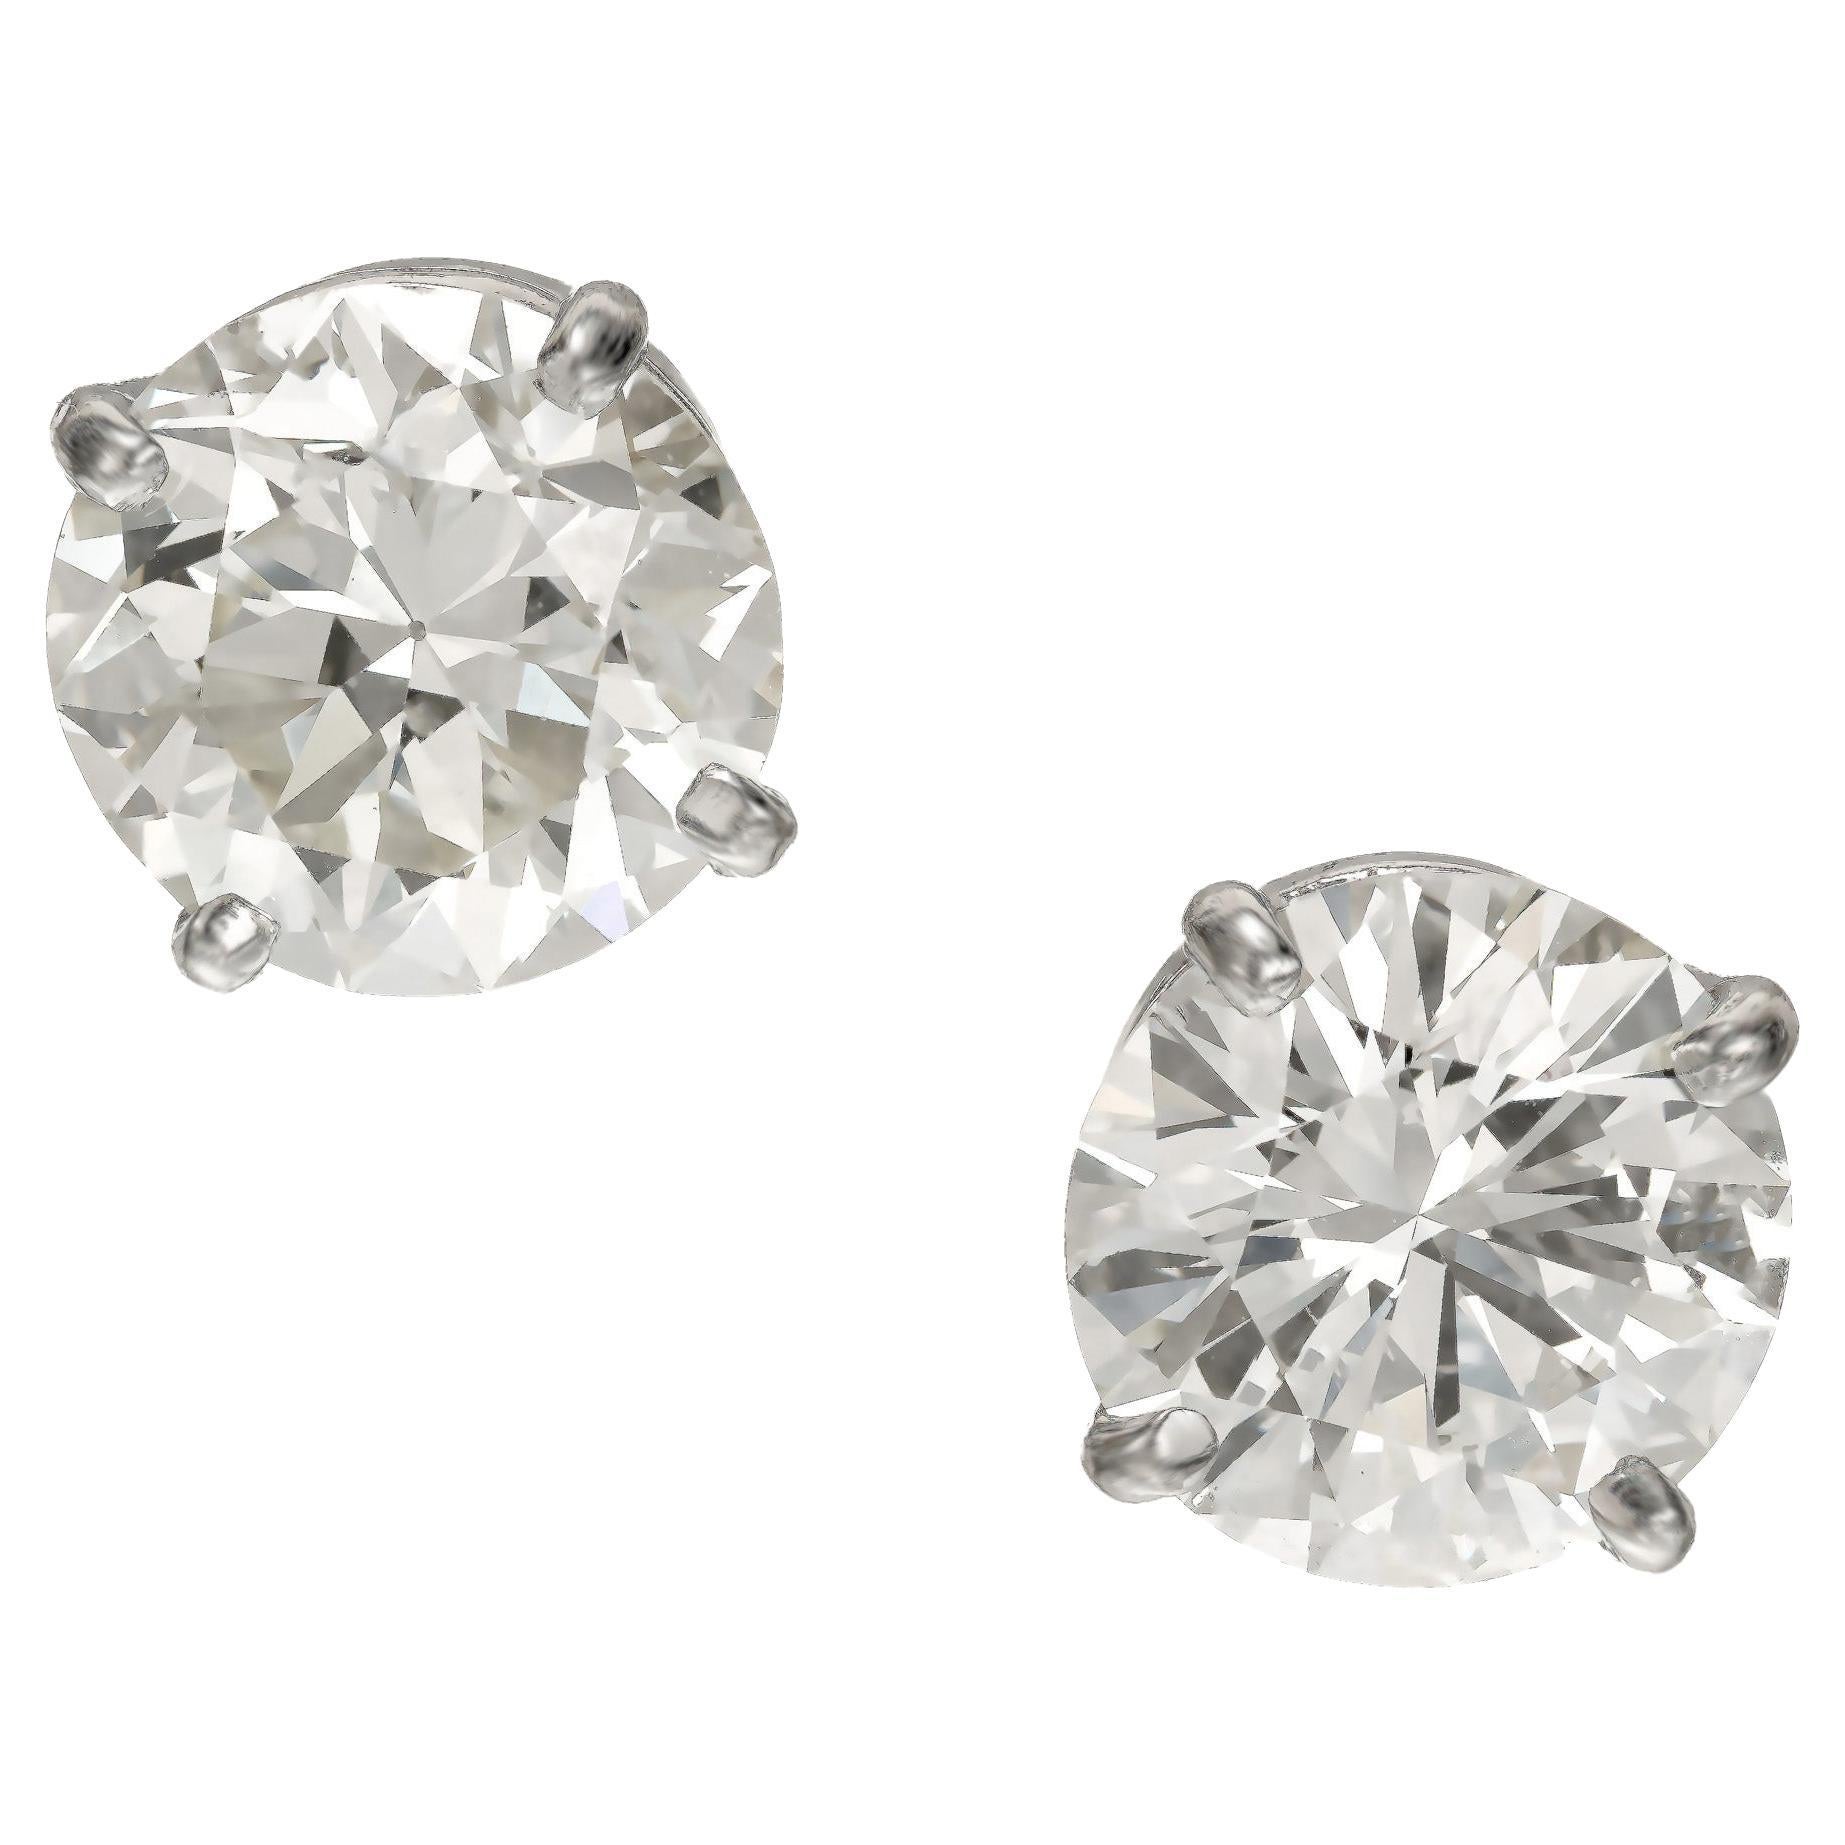 GIA Certified 3.35 Carat Diamond Platinum Stud Earrings